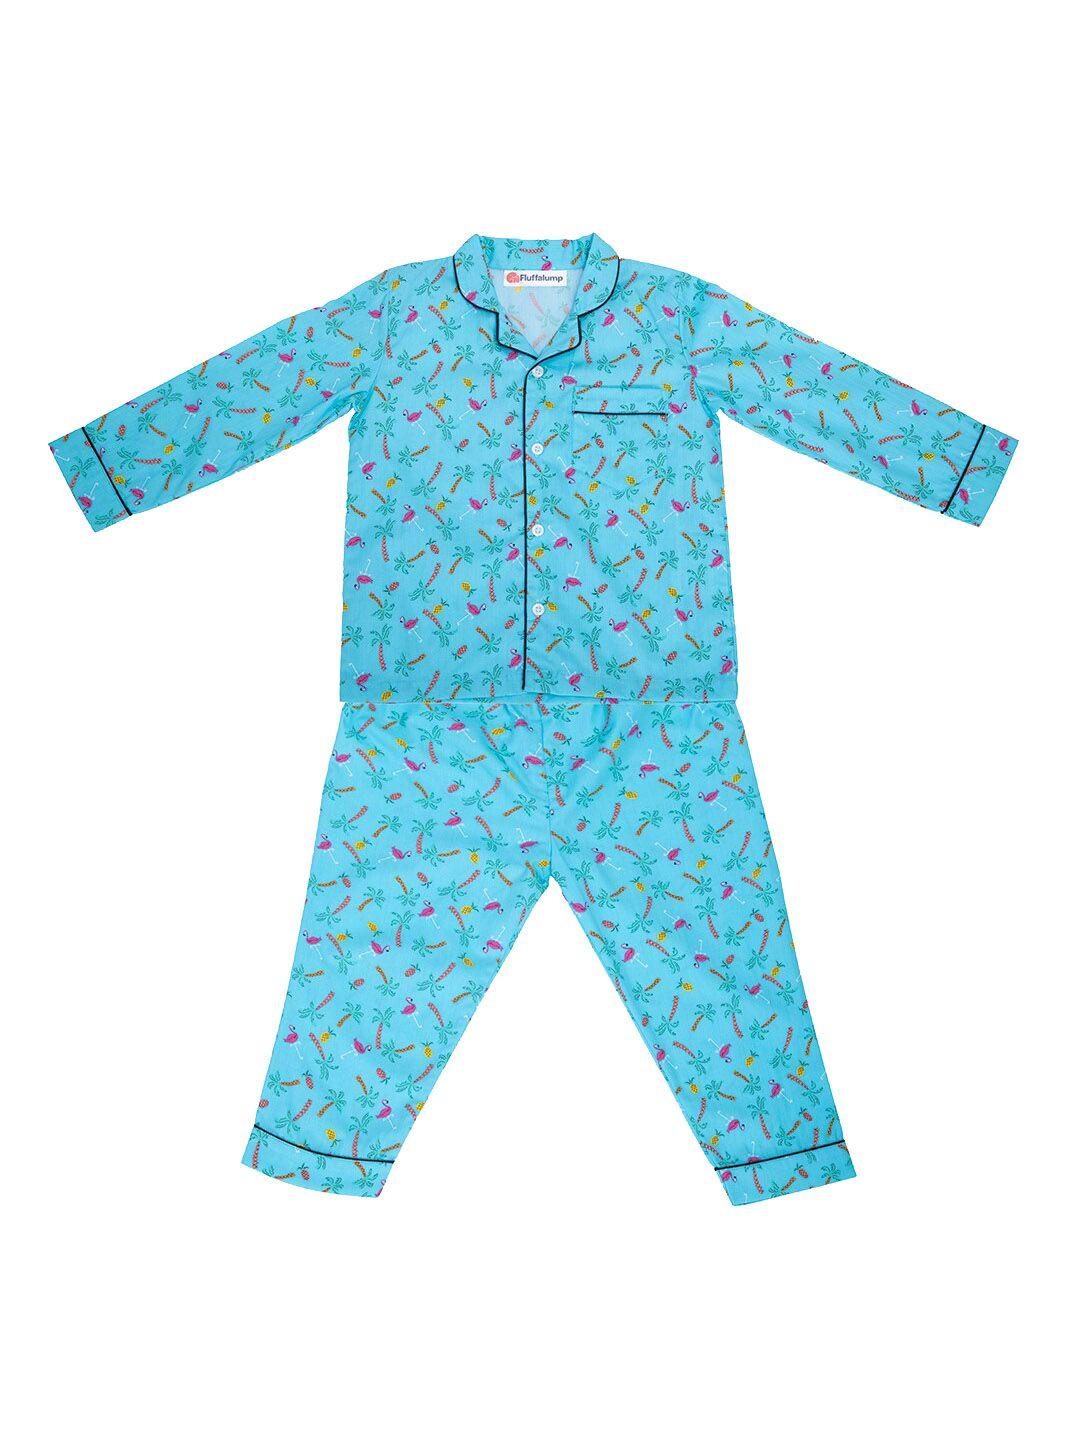 fluffalump kids conversational printed pure cotton night suit